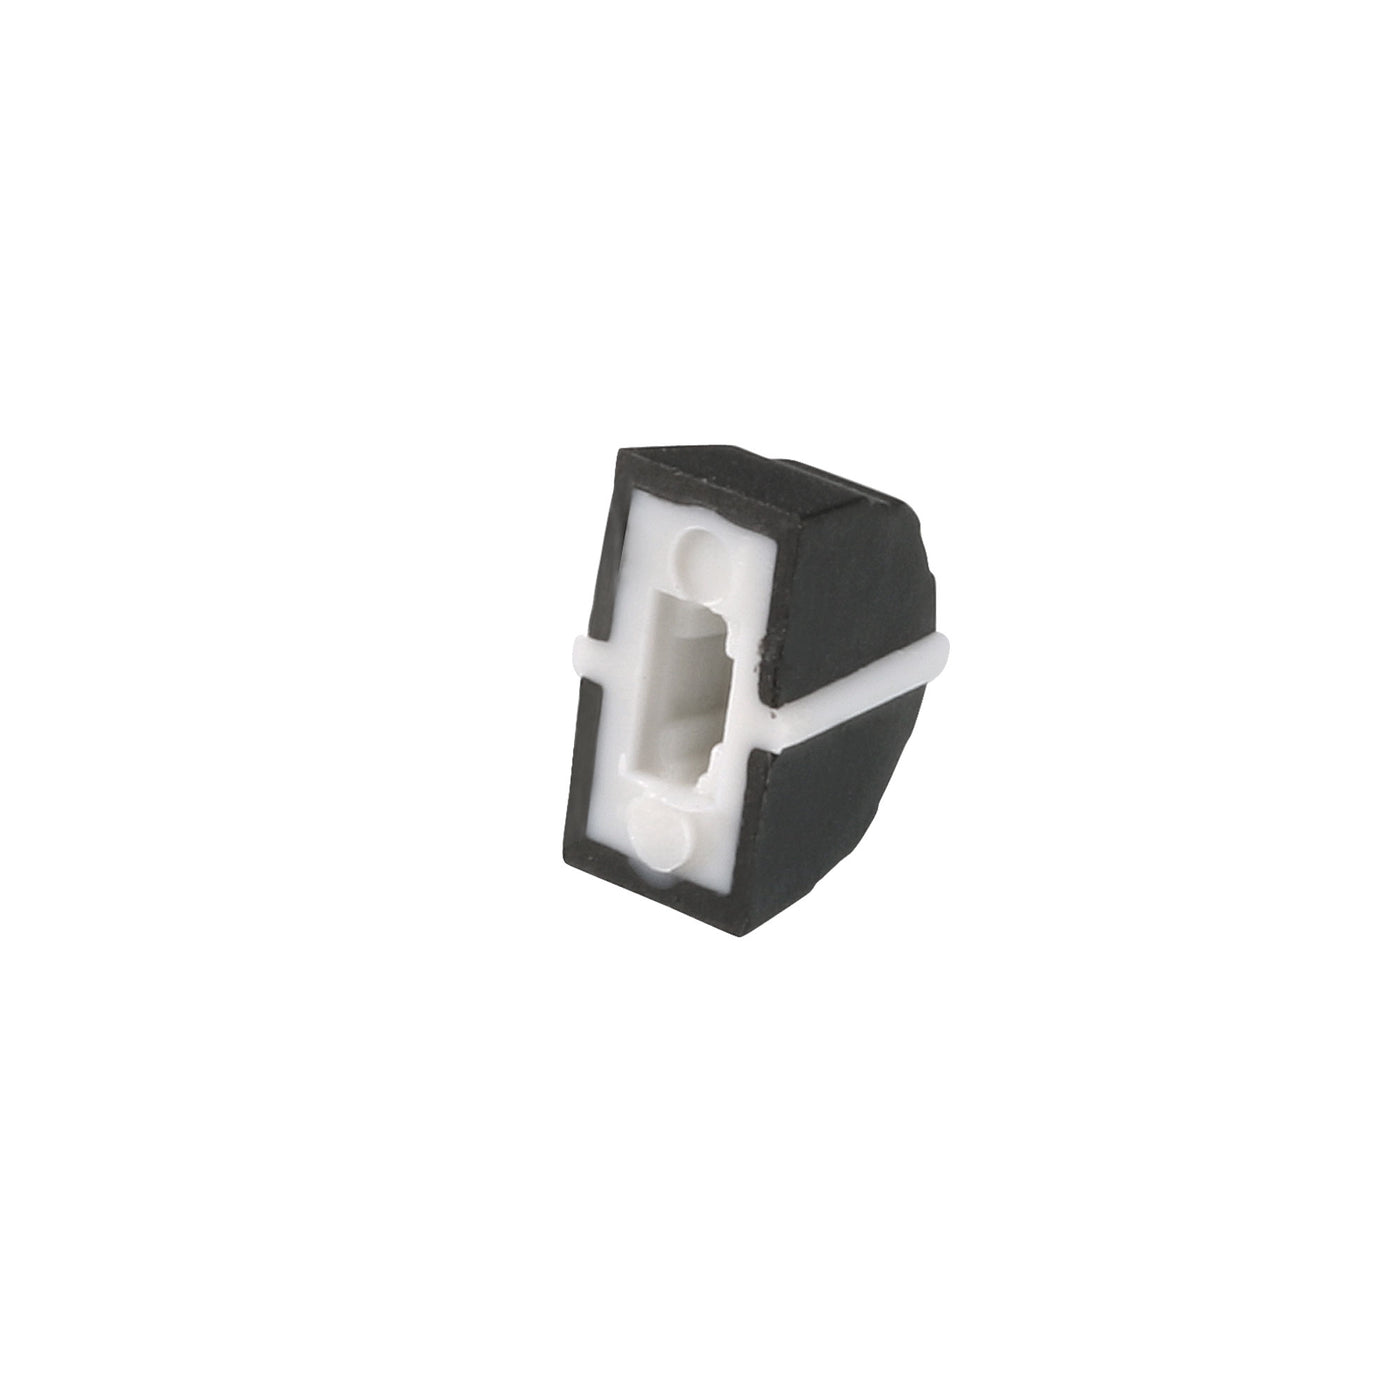 uxcell Uxcell Plastic Straight Slide Potentiometer Flat Push Knob Insert Shaft 4x1.6mm White Black 5pcs